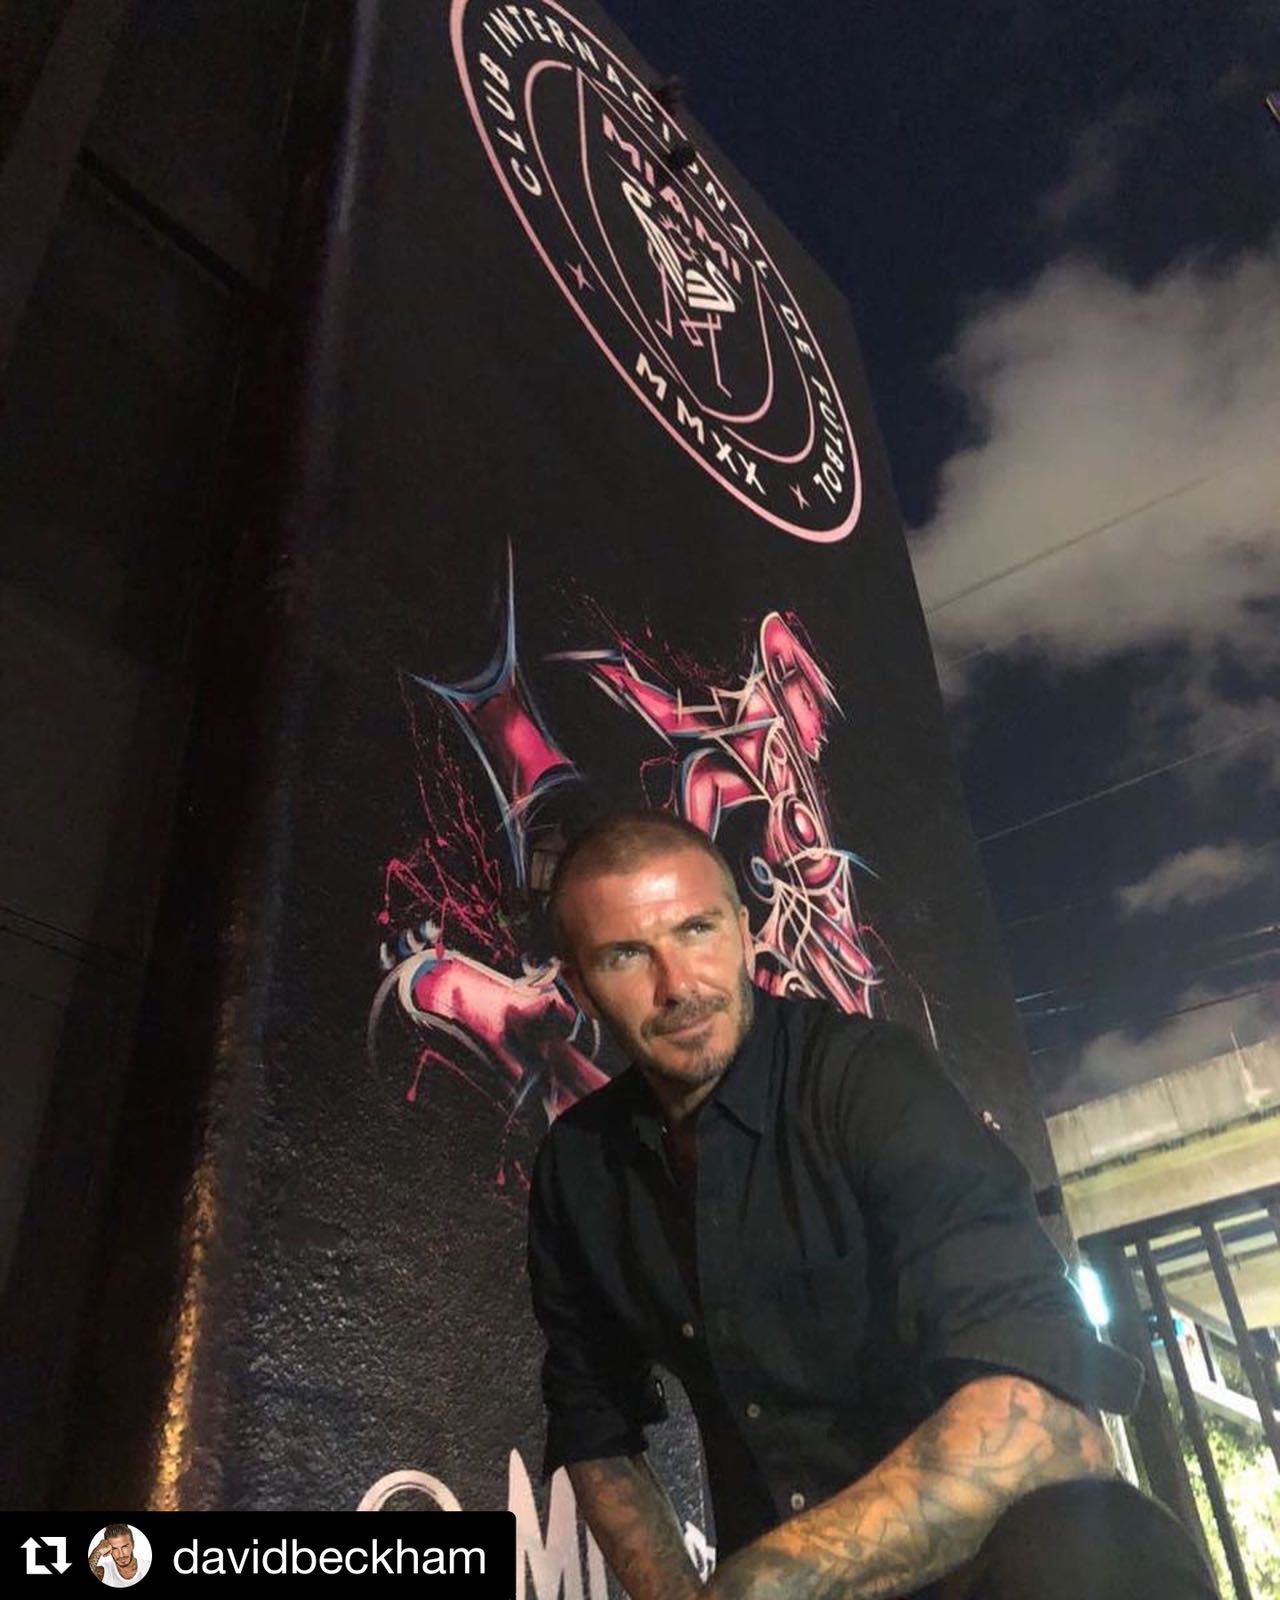 David Beckham in front of the mural designed by artist Alexander Mijares